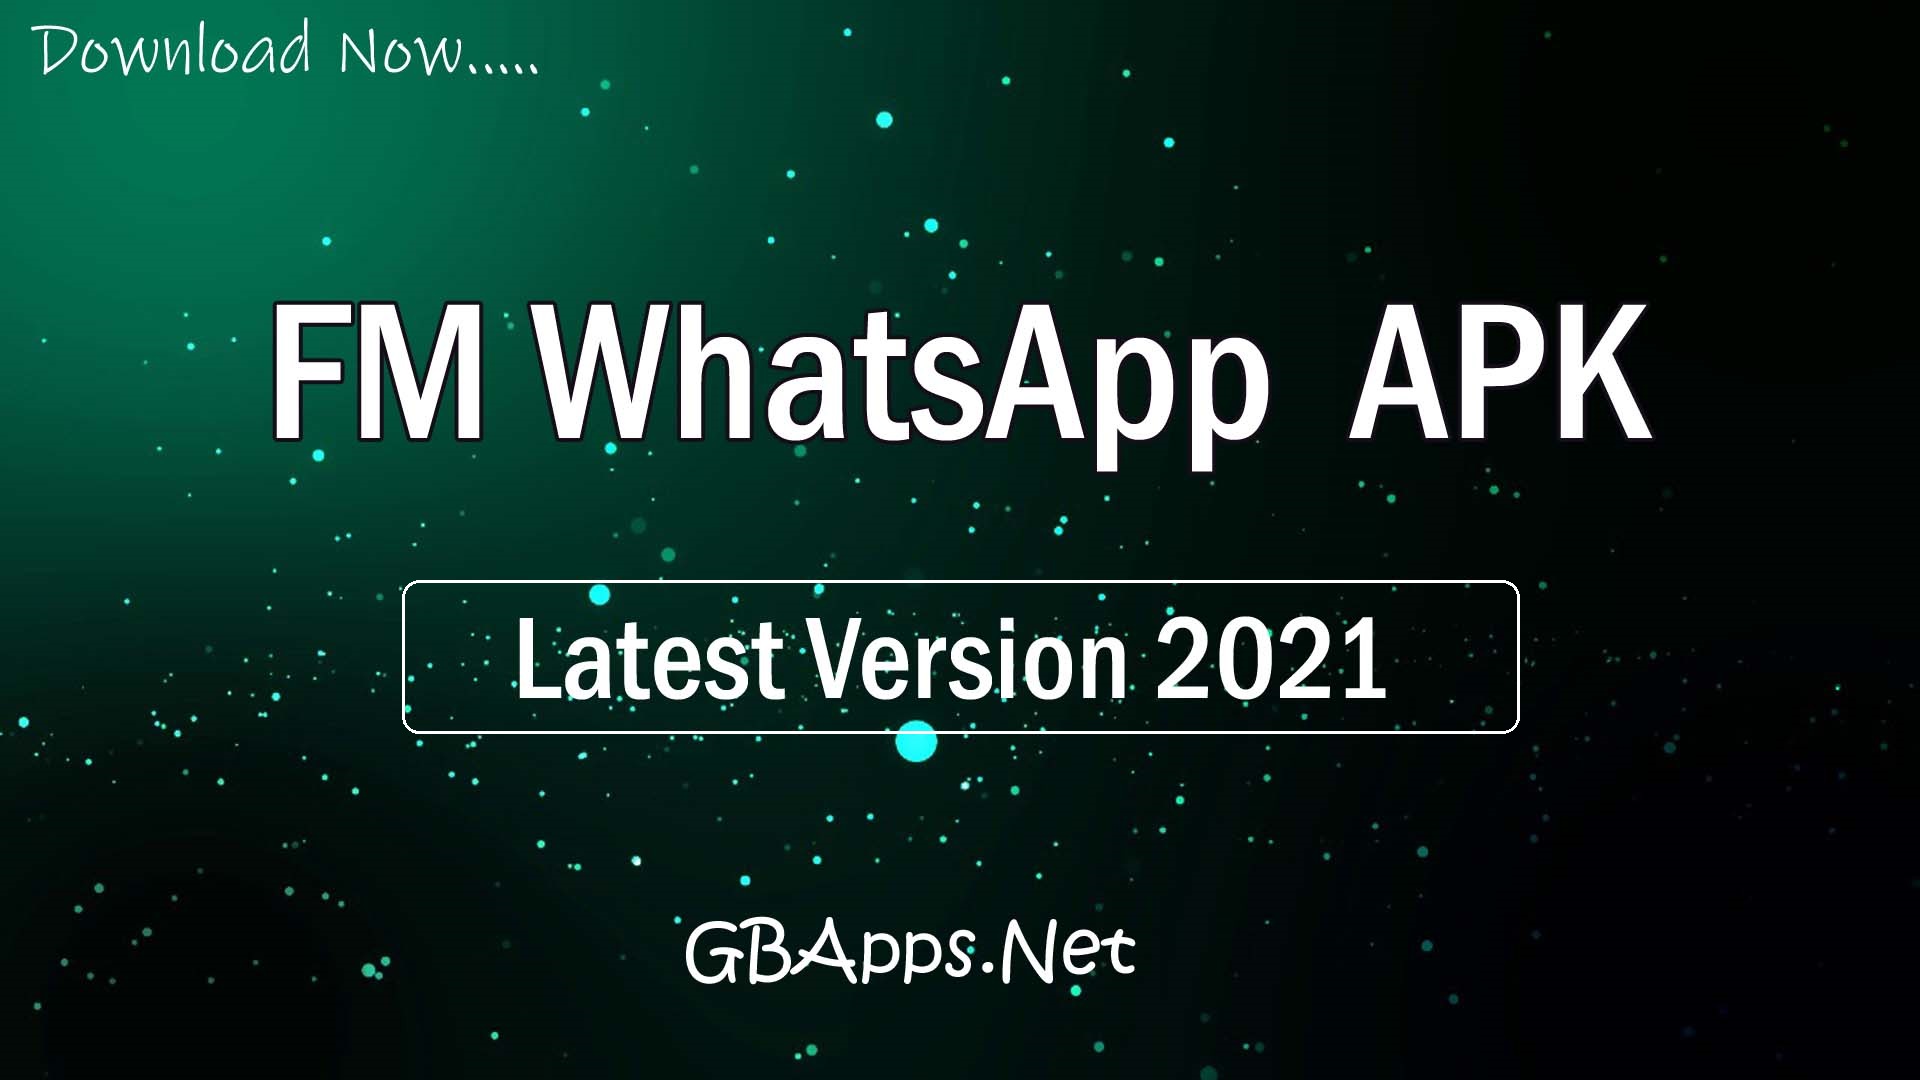 whatsapp app download 2021 new version